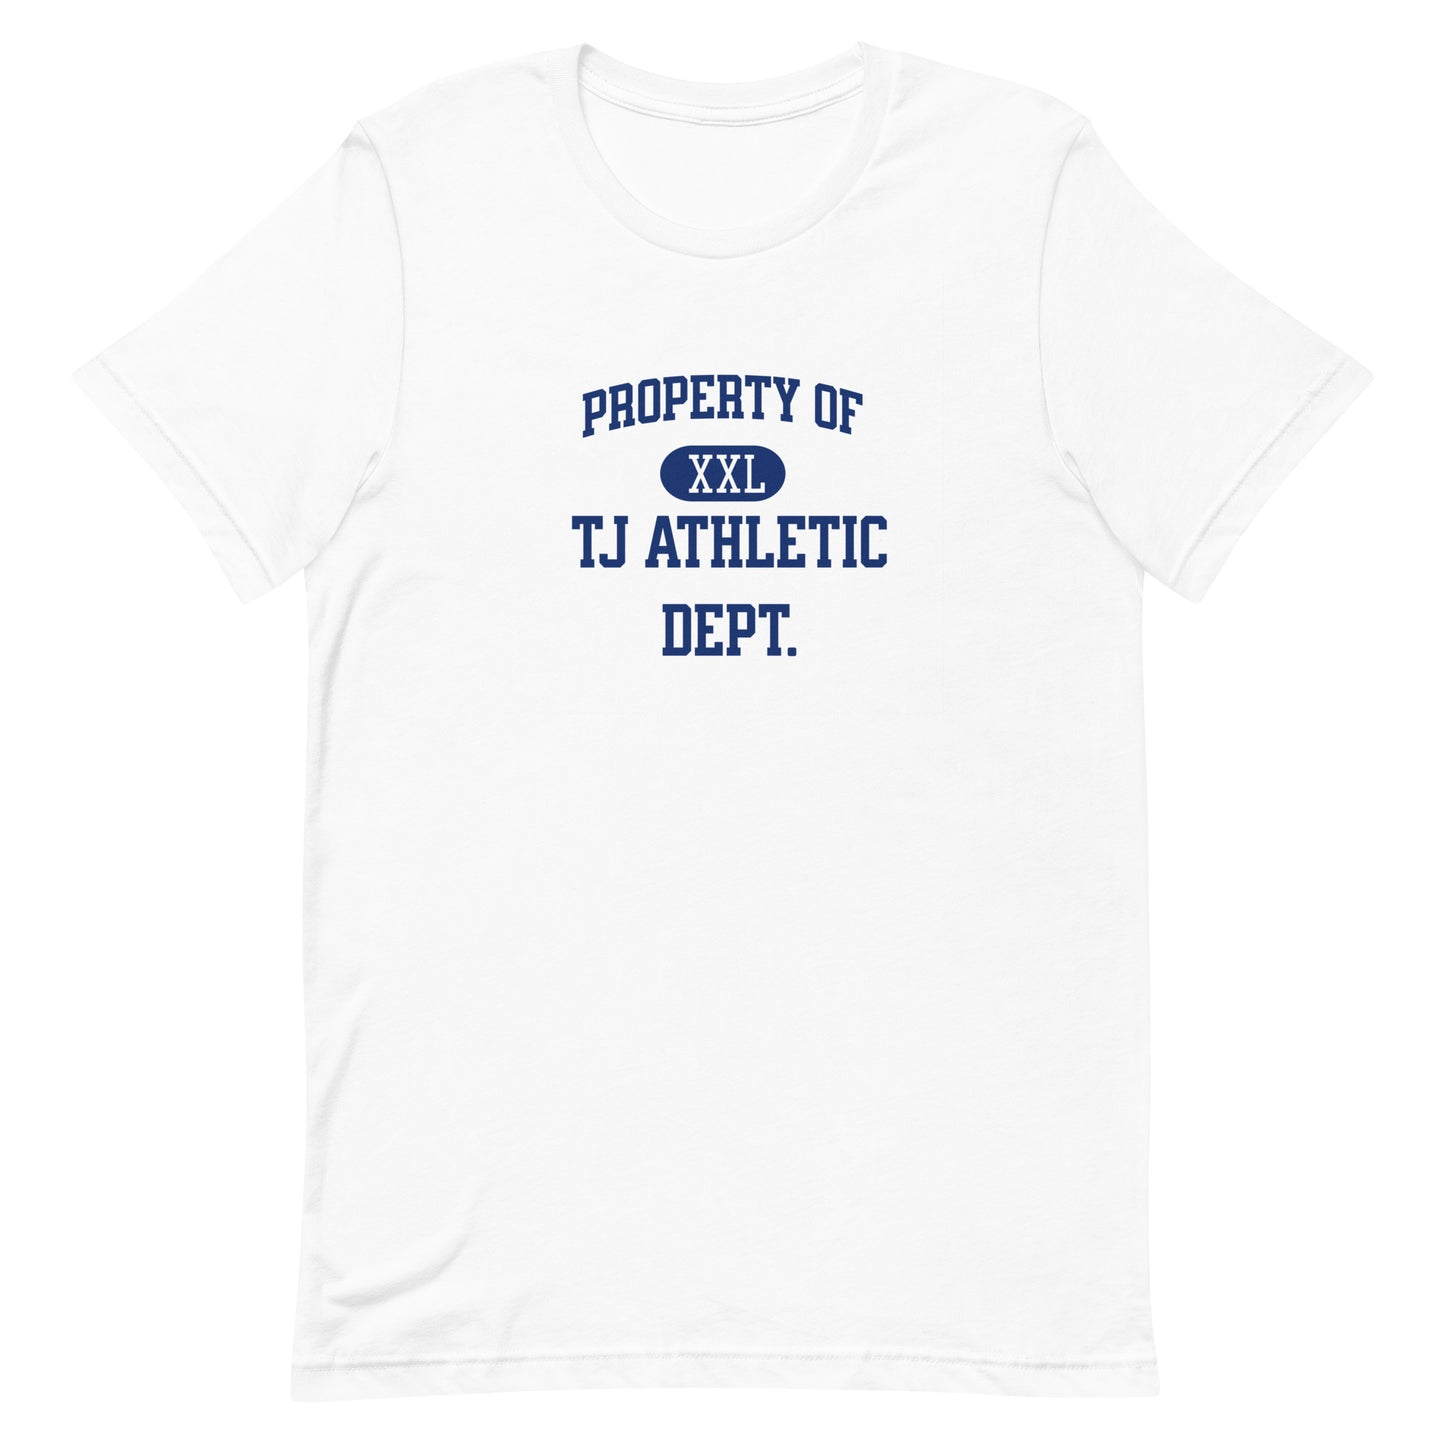 Tj Athletic Dept. Short-Sleeve Unisex T-Shirt